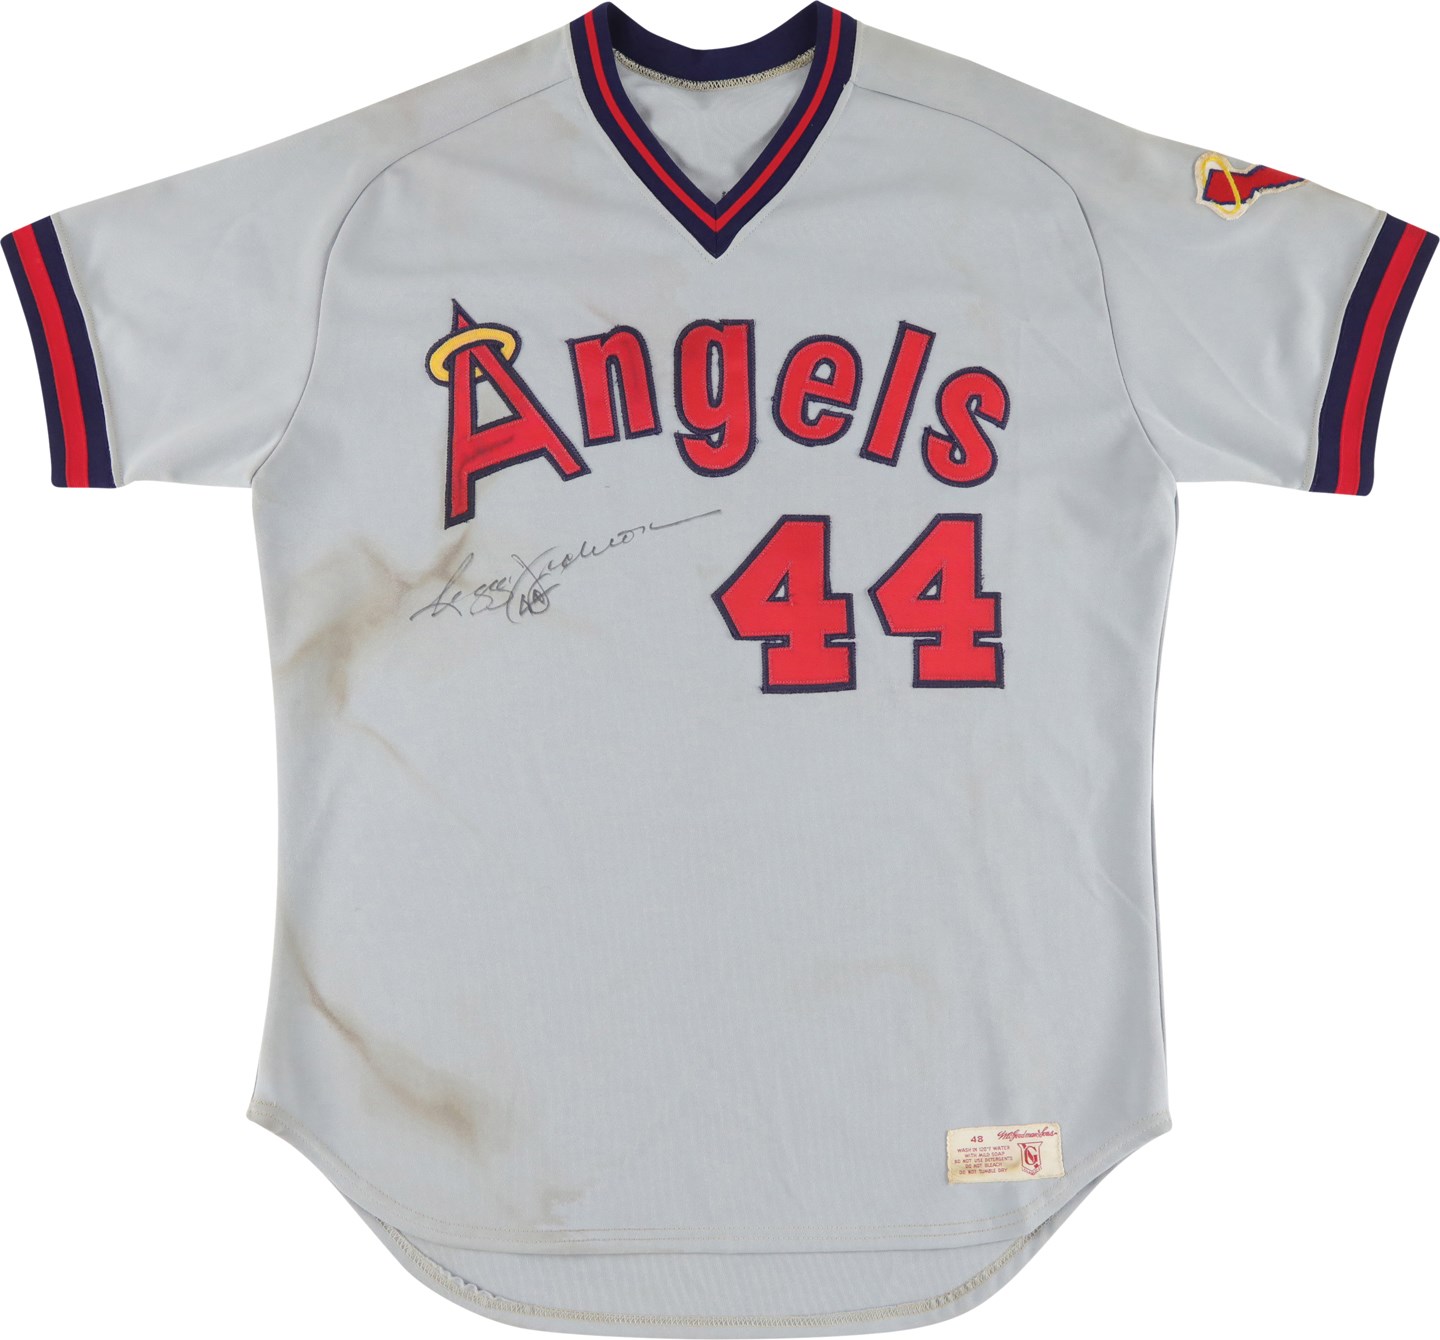 Mid-1980s Reggie Jackson California Angels Signed Game Worn Jersey